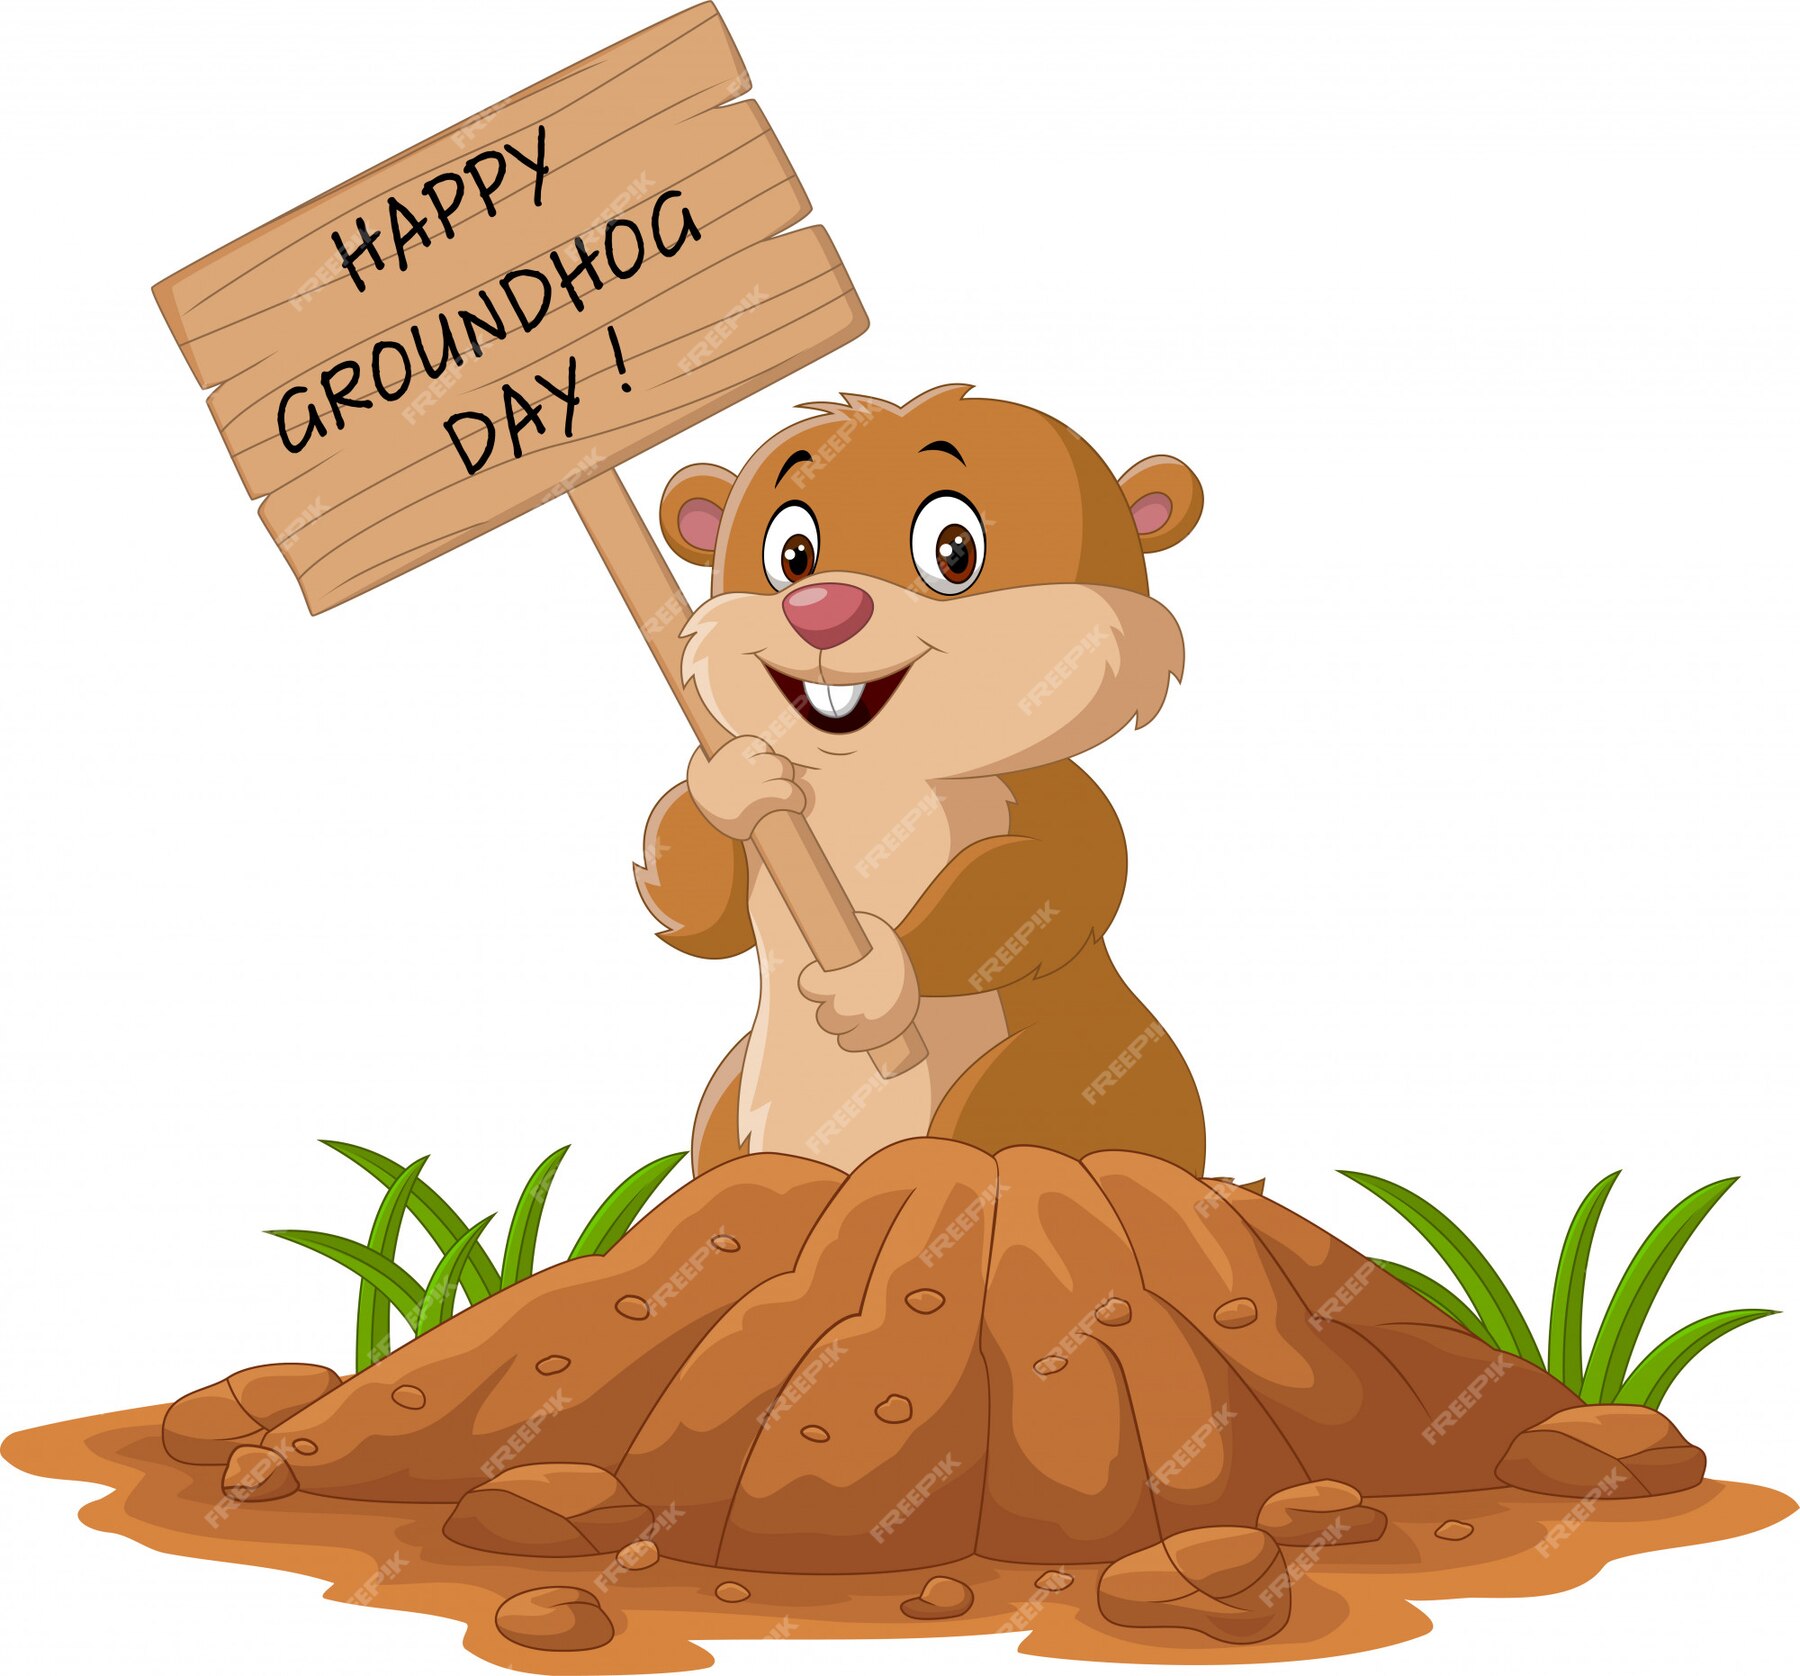 Premium Vector Happy groundhog day. funny groundhog holding wooden sign